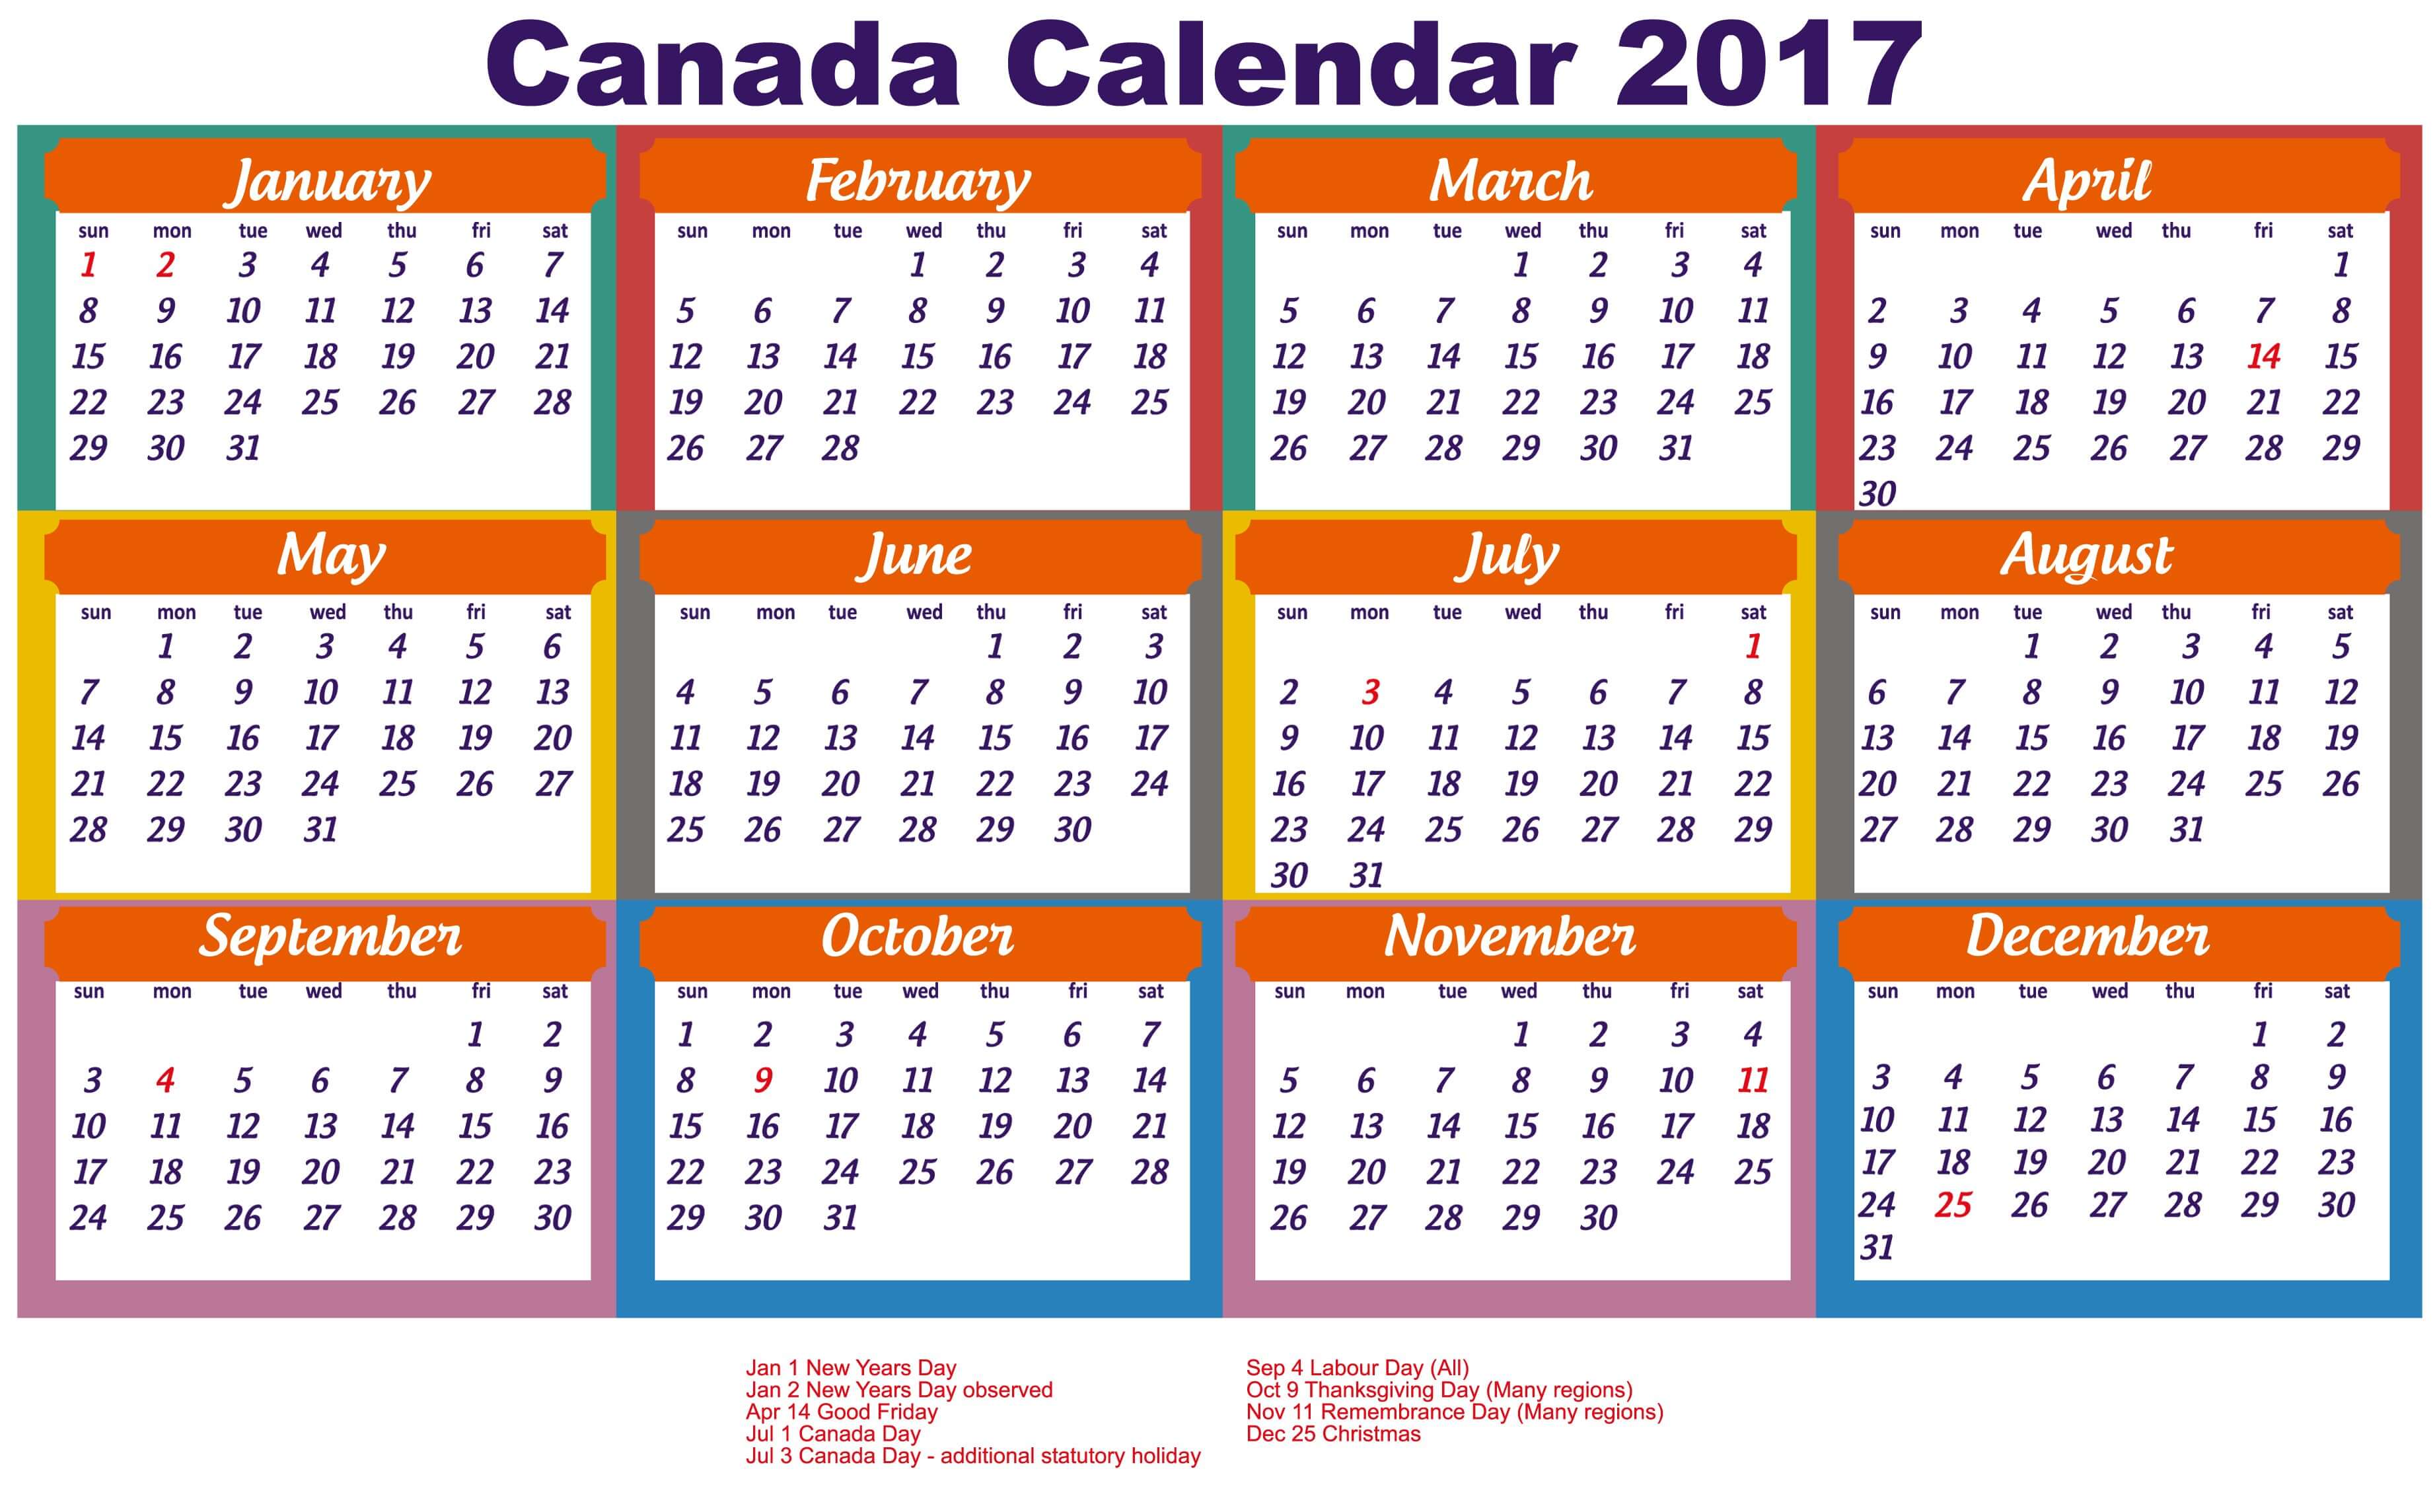 calendar-2017-50-important-calendar-templates-of-2017-pdf-jpg